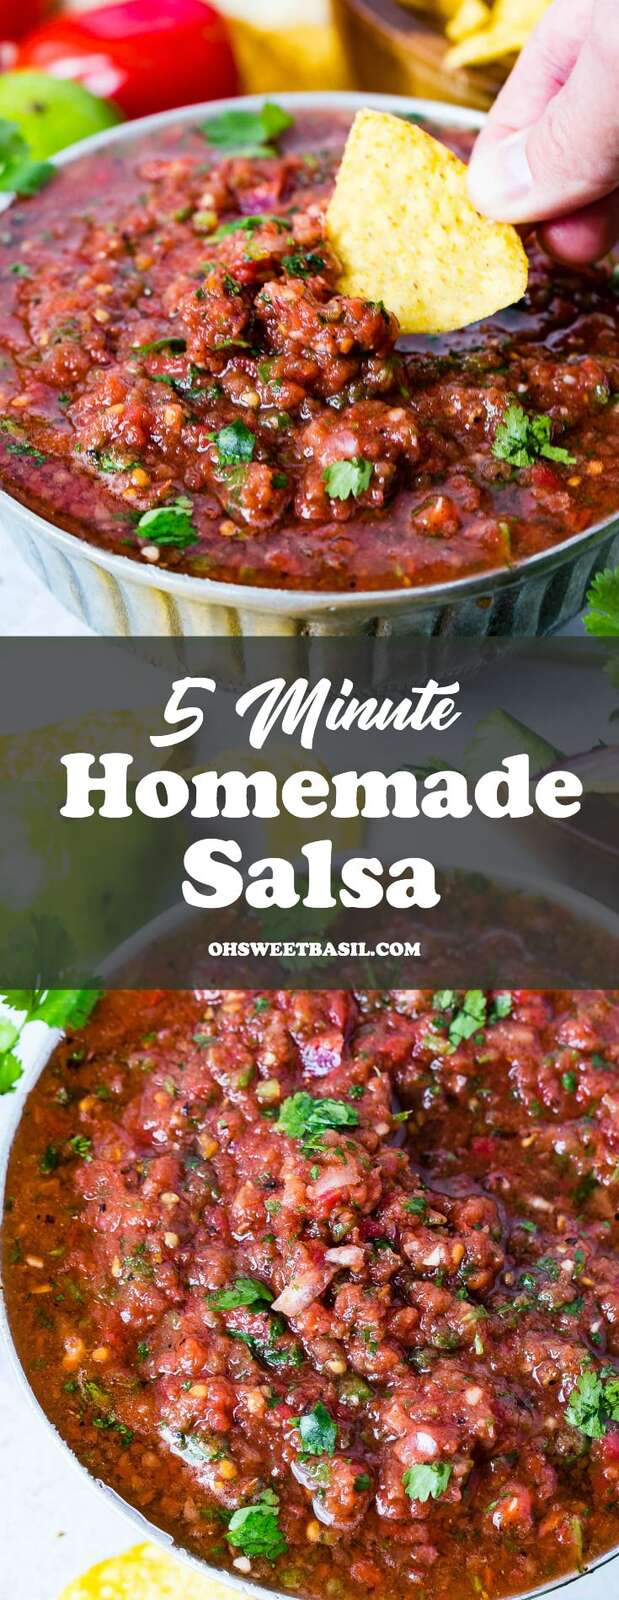 5-Minute-Homemade-Salsa-ohsweetbasil.com_.jpg